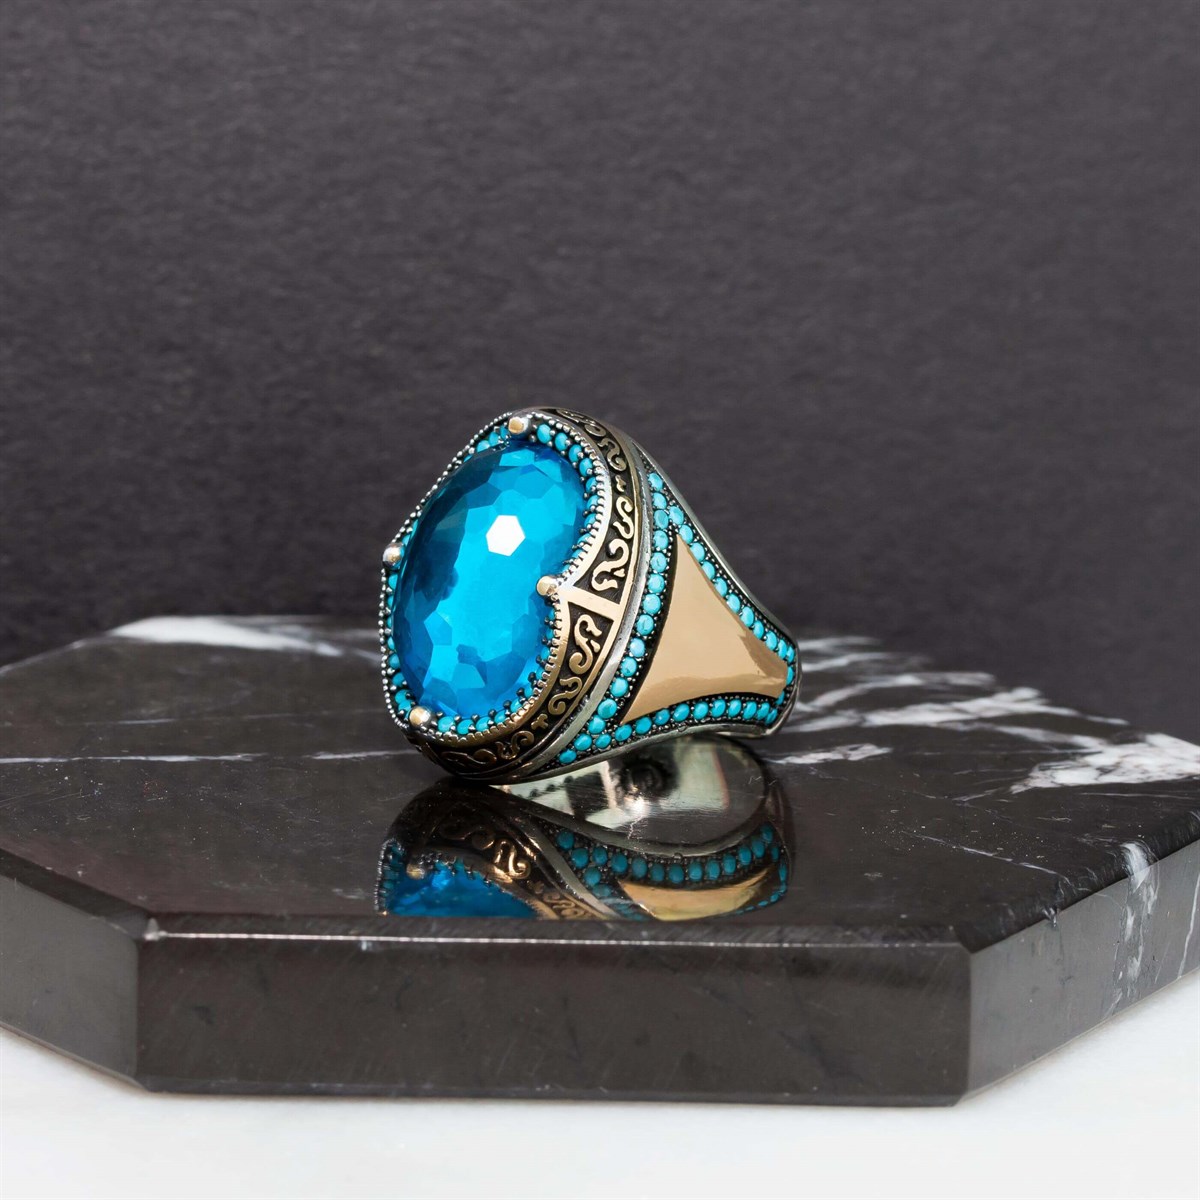 Aqua Quartz Stone Turquoise Decorated Sterling Silver Men's Ring